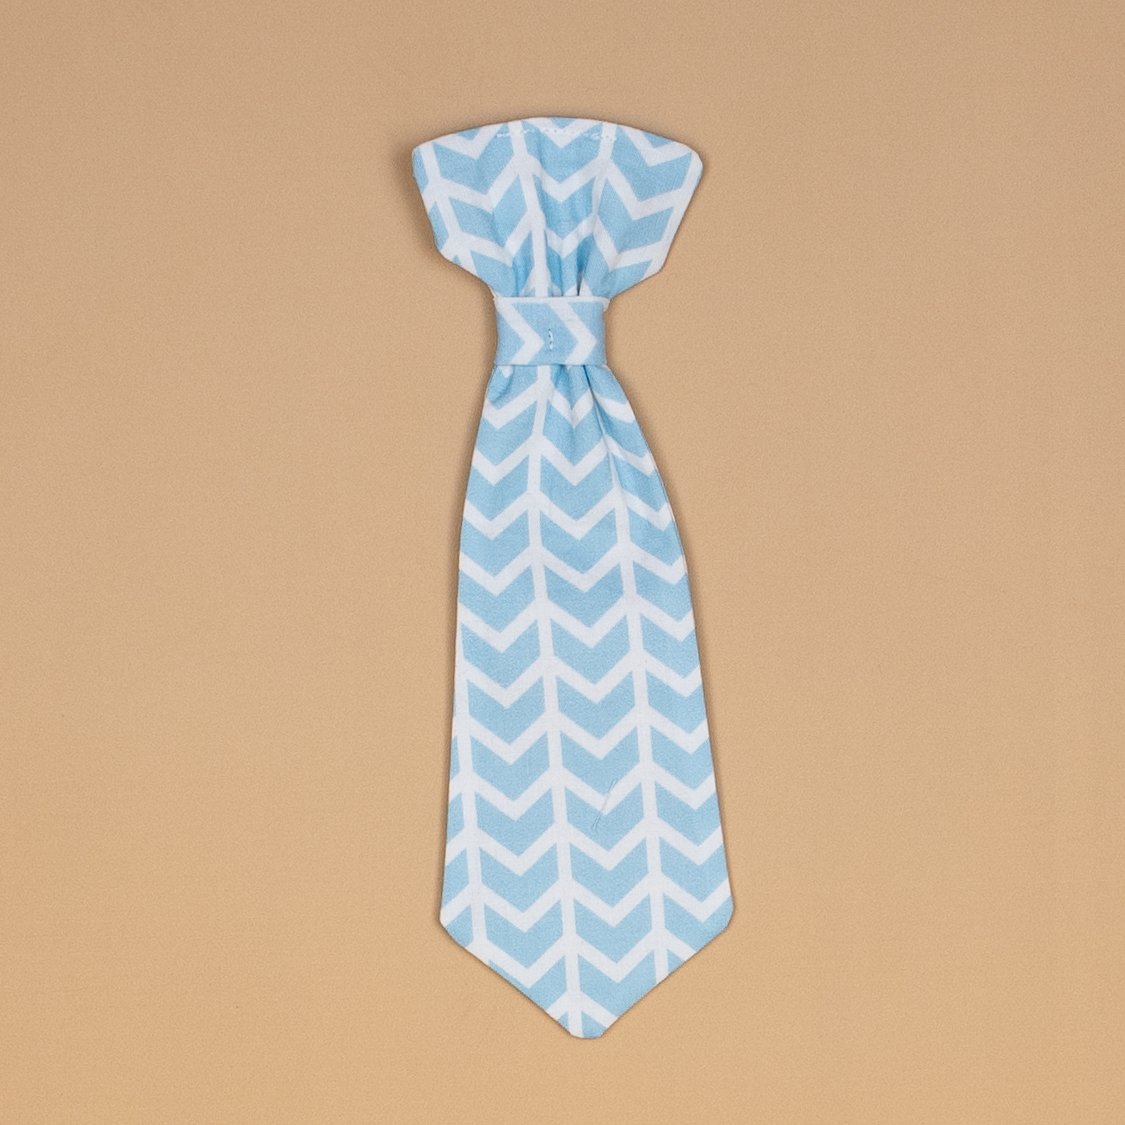 baby blue tie clipart